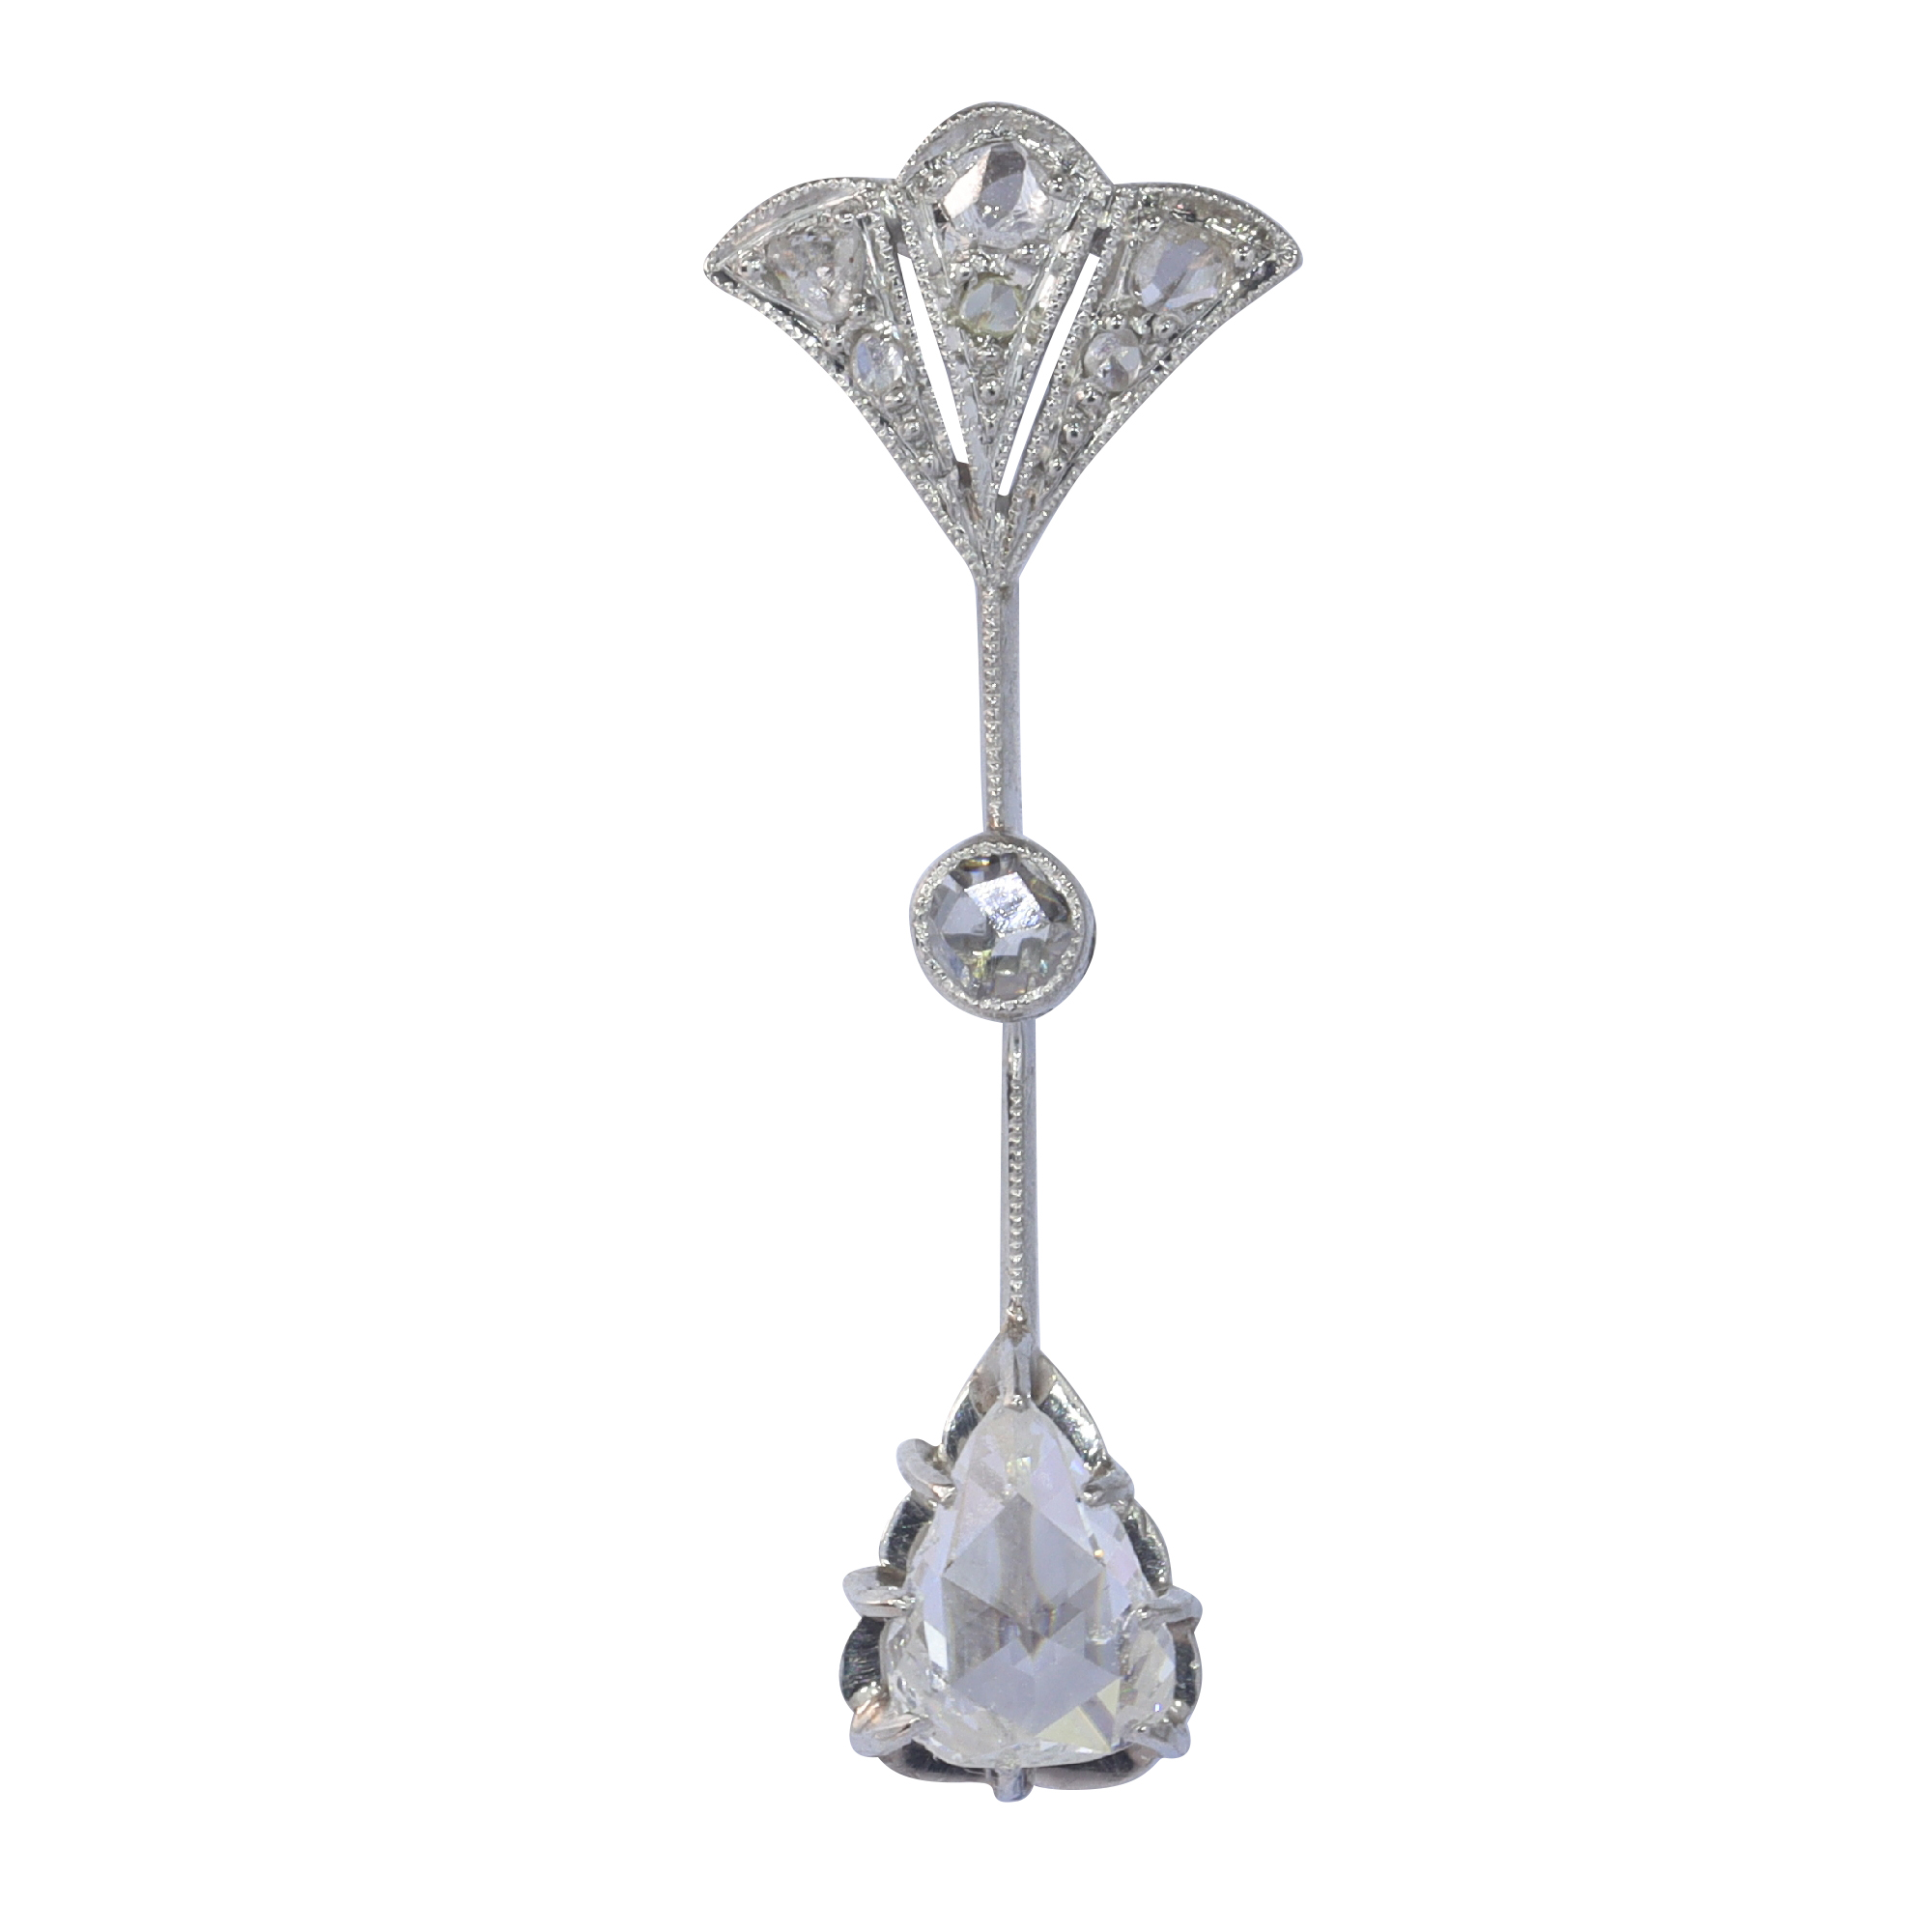 Vintage 1920 s Art Deco diamond pendant with large rose cut diamond pear shape